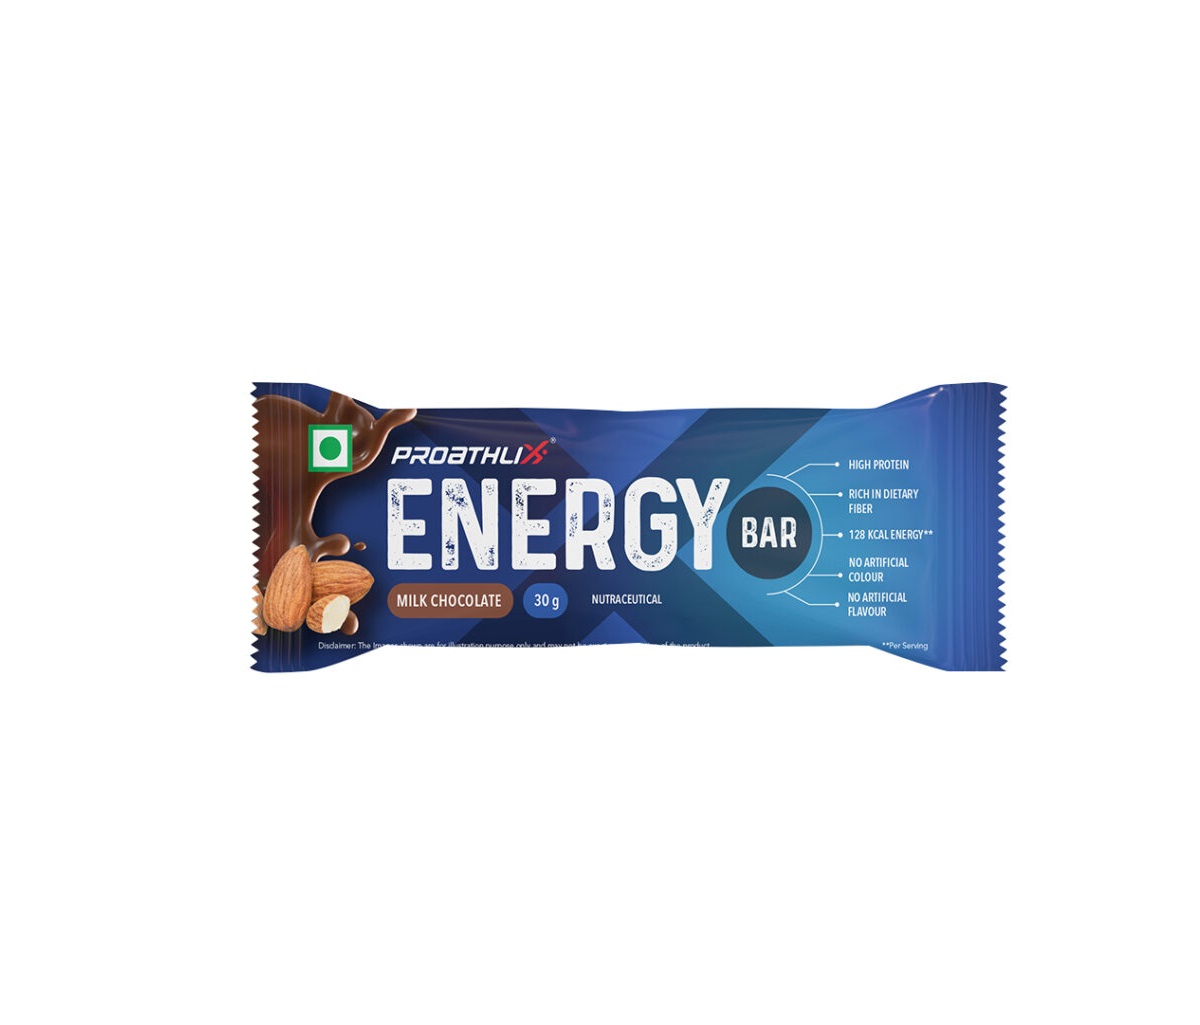 19-energy-bar-nutrition-facts